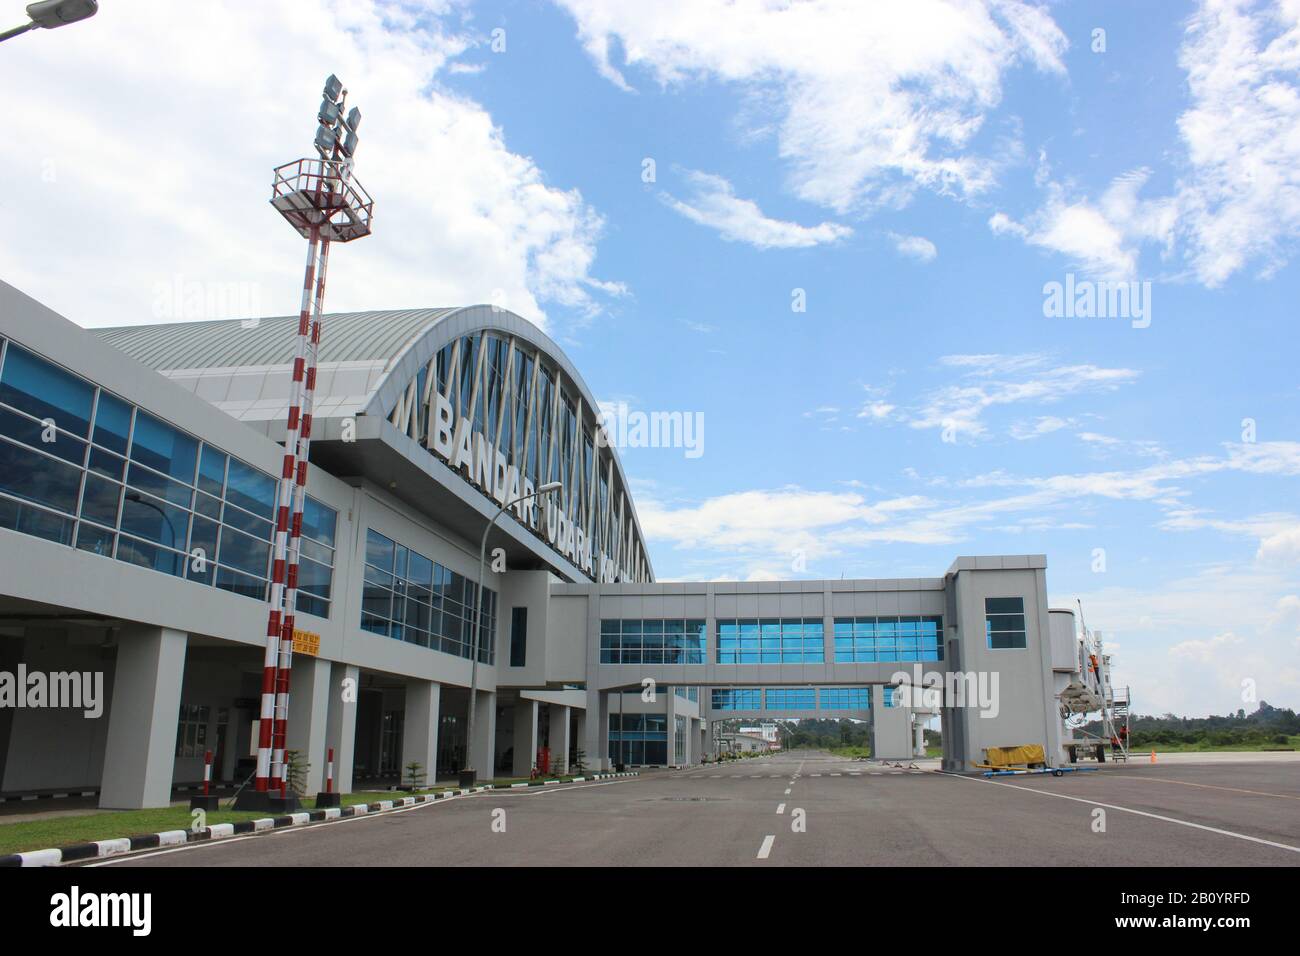 Kalimarau Airport, Berau Stock Photo